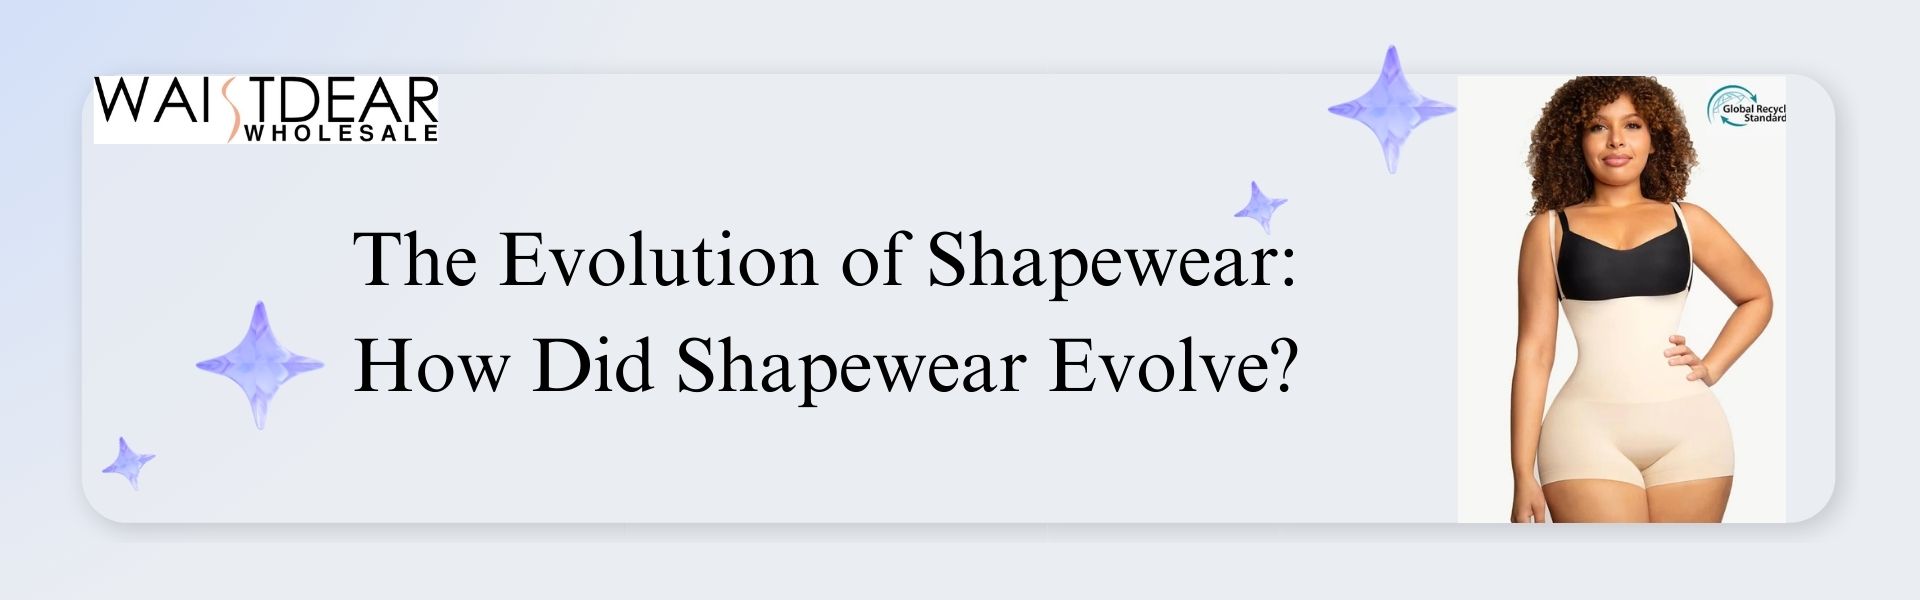 The Evolution of Shapewear: How Did Shapewear Evolve?